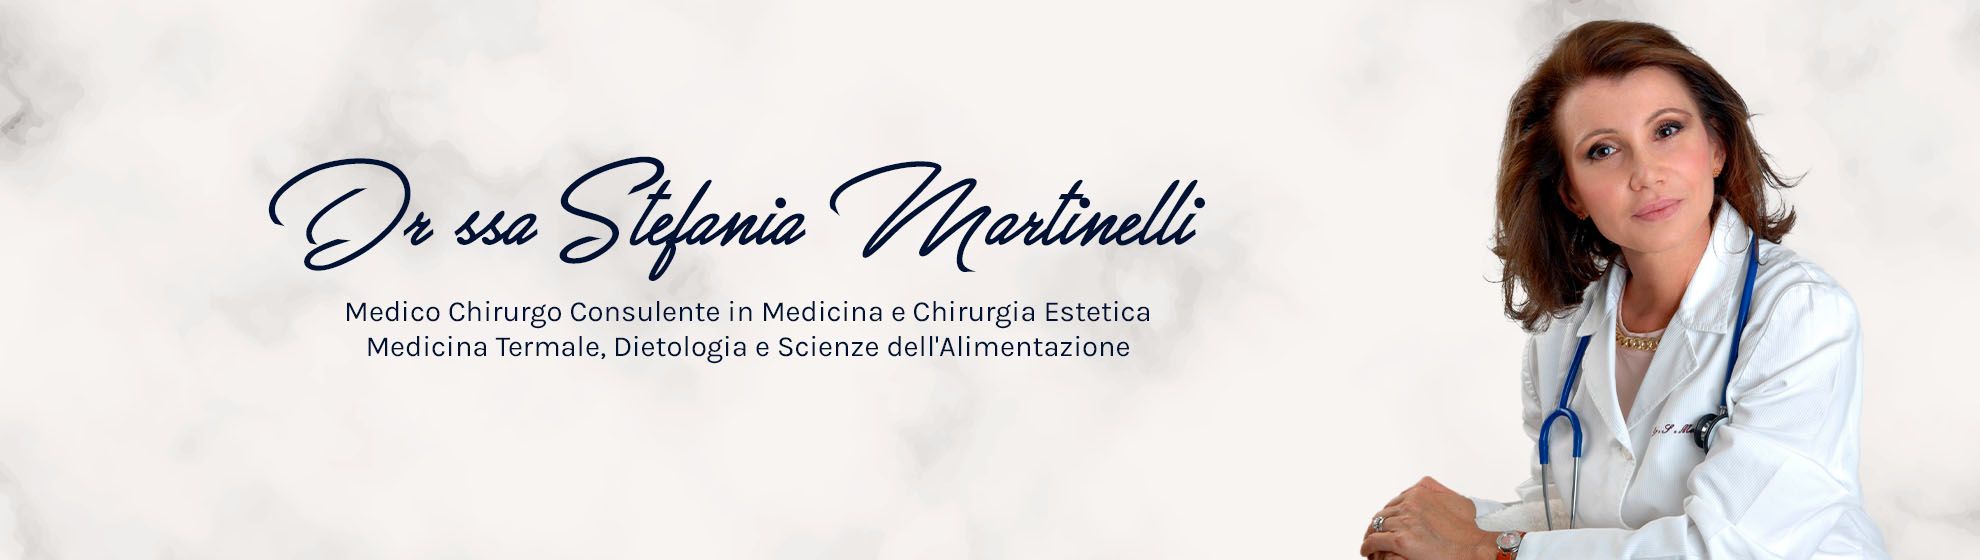 Dr.ssa Stefania Martinelli